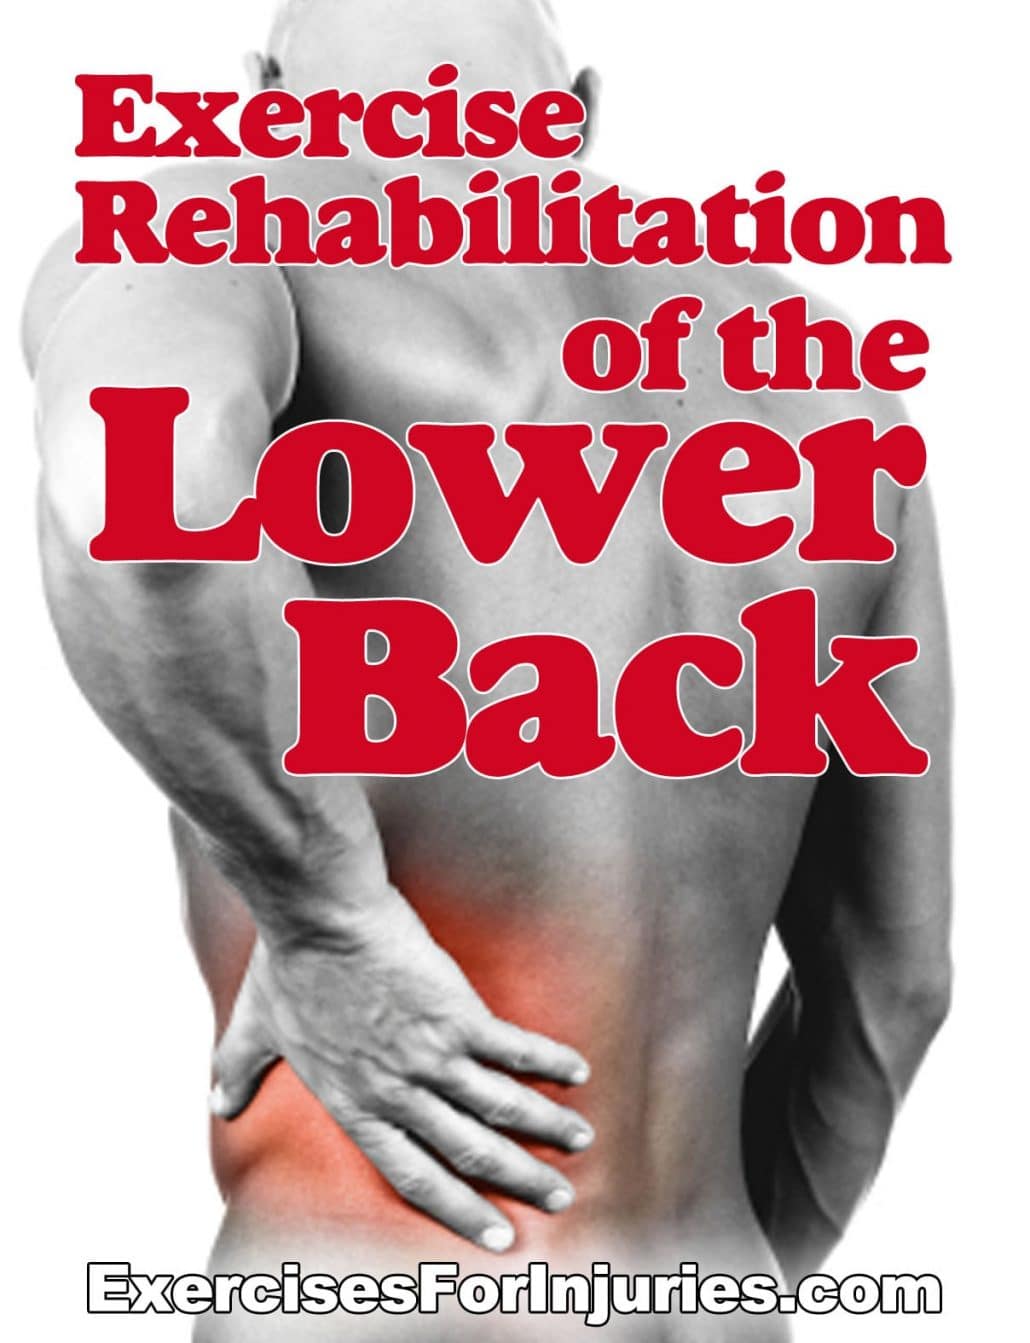 Exercise_Rehabilitation_of_the_Lower_Back